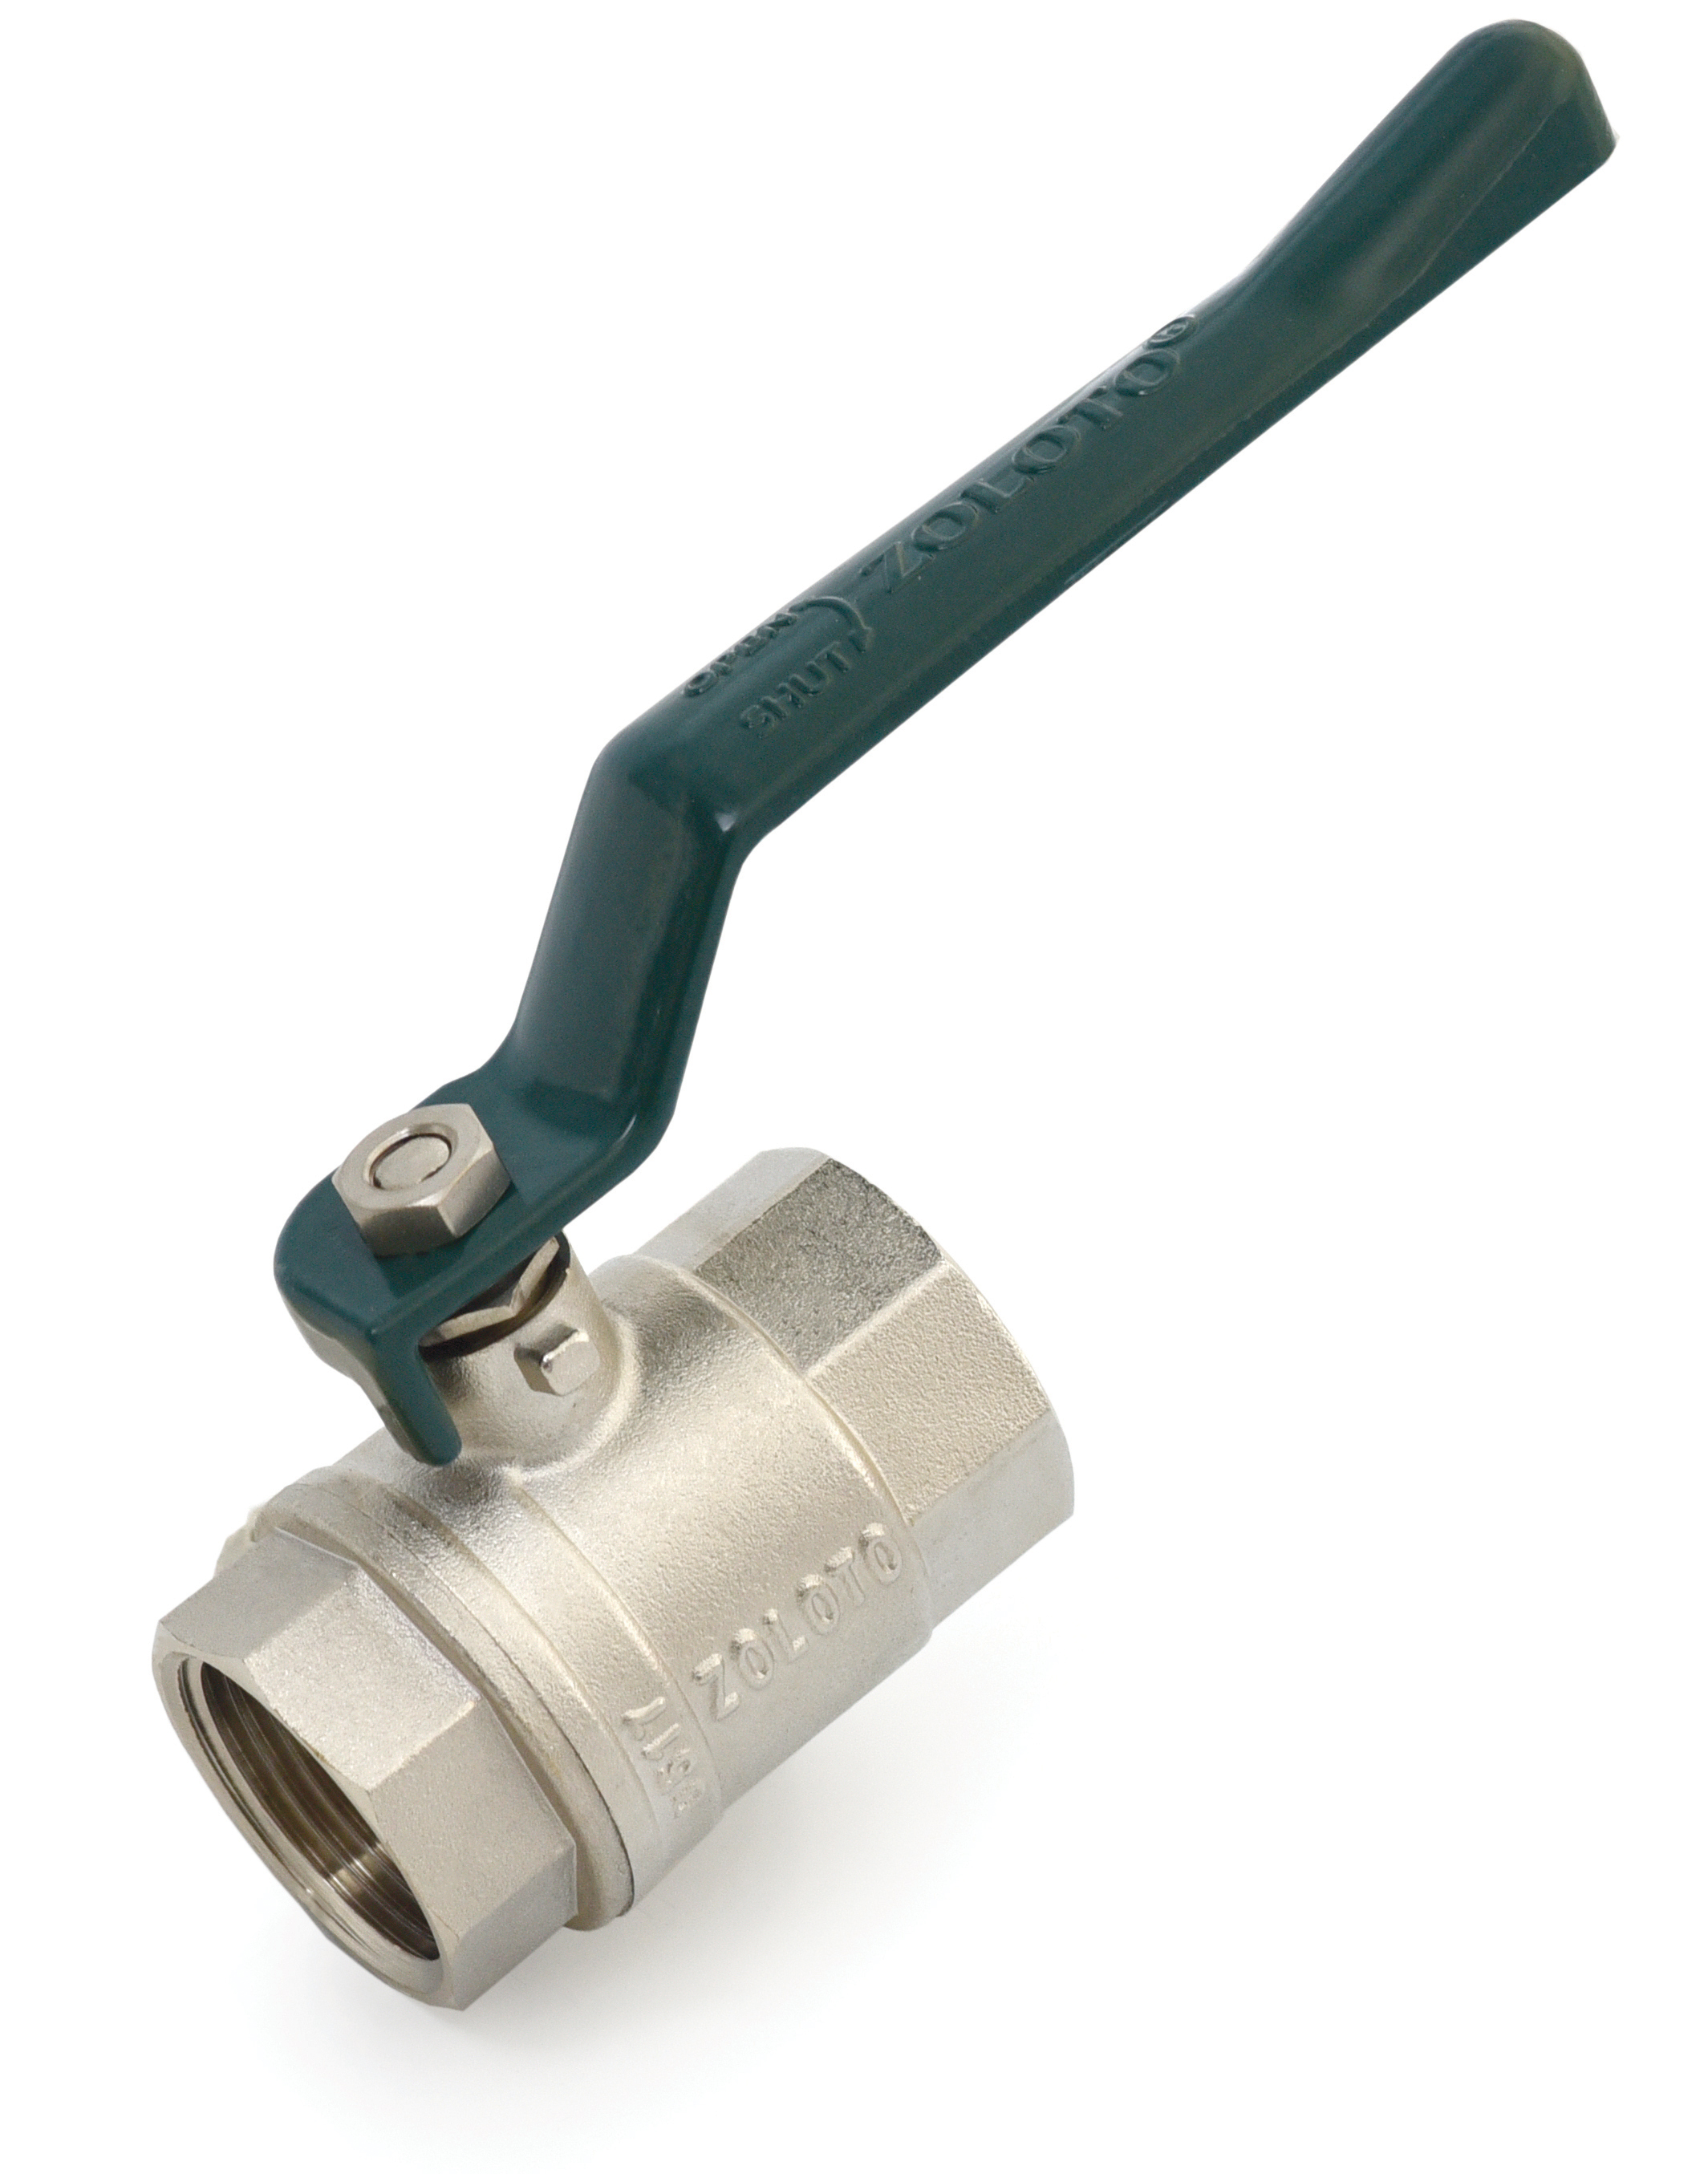 Zoloto forged brass ball valve